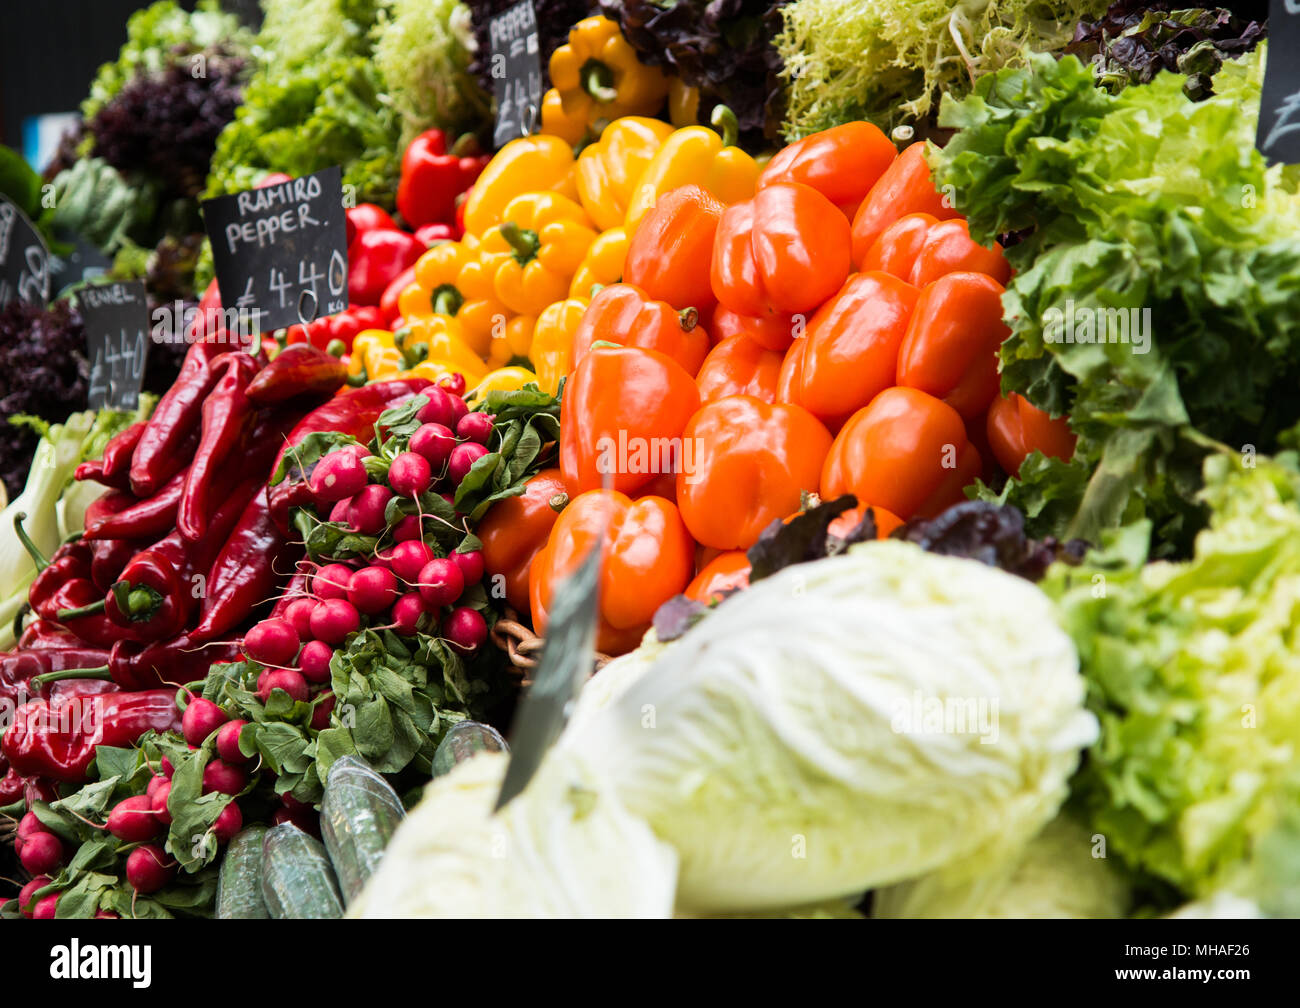 Fruta y verdura - calado Borough Market Londres Reino unido Foto de stock